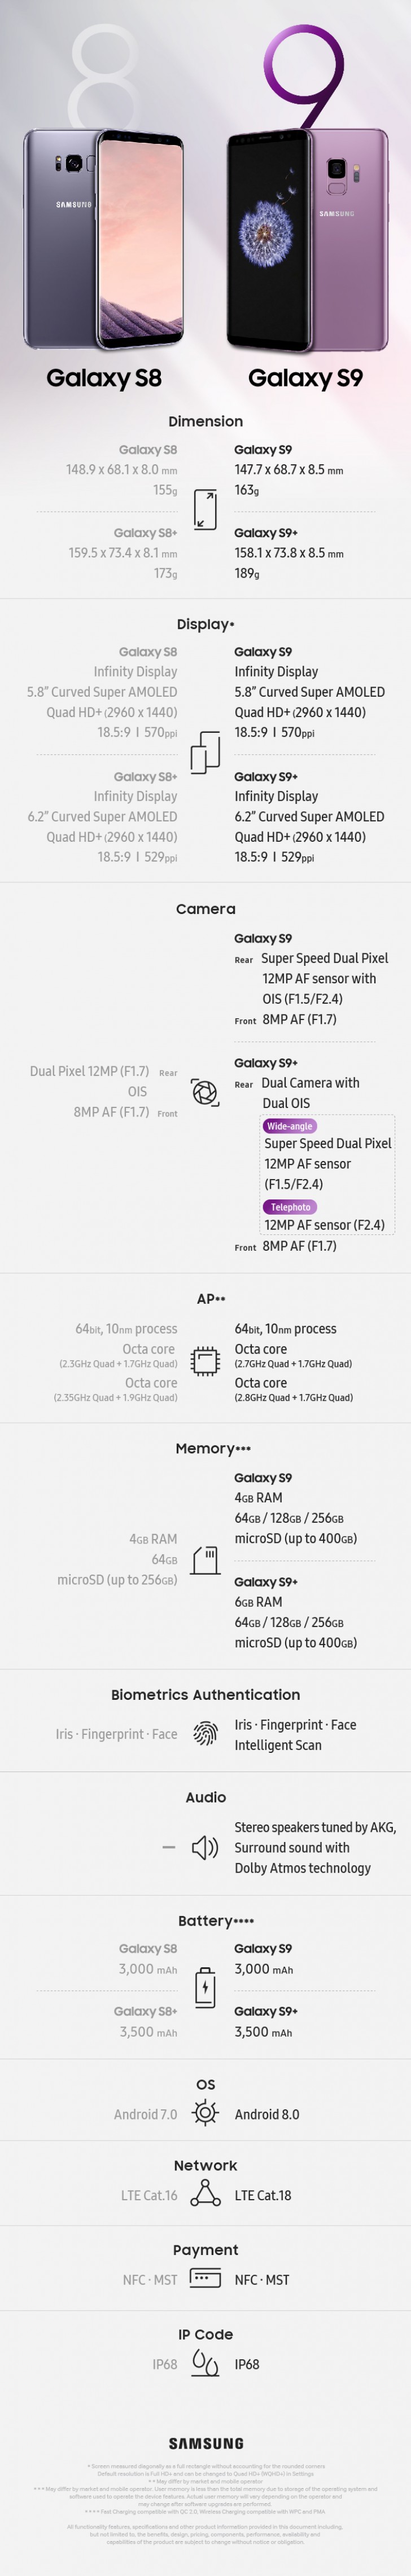 Samsung Galaxy S8 Vs The Galaxy S9 Specs Infographic Gsmarena Com News